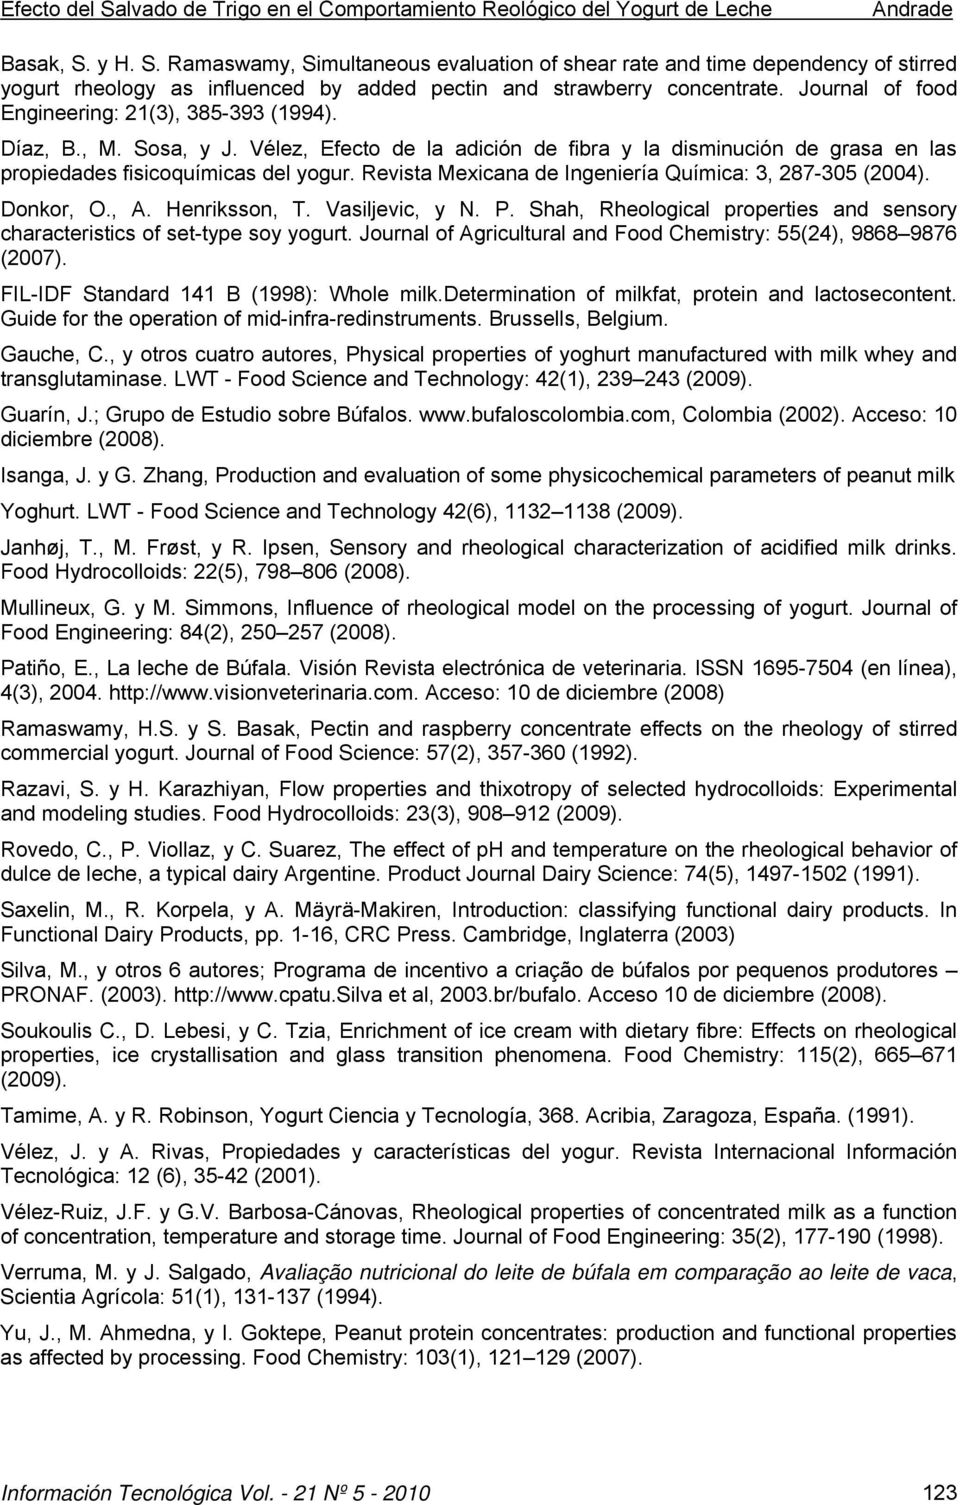 Revista Mexicana de Ingeniería Química: 3, 287-35 (24). Donkor, O., A. Henriksson, T. Vasiljevic, y N. P. Shah, Rheological properties and sensory characteristics of set-type soy yogurt.